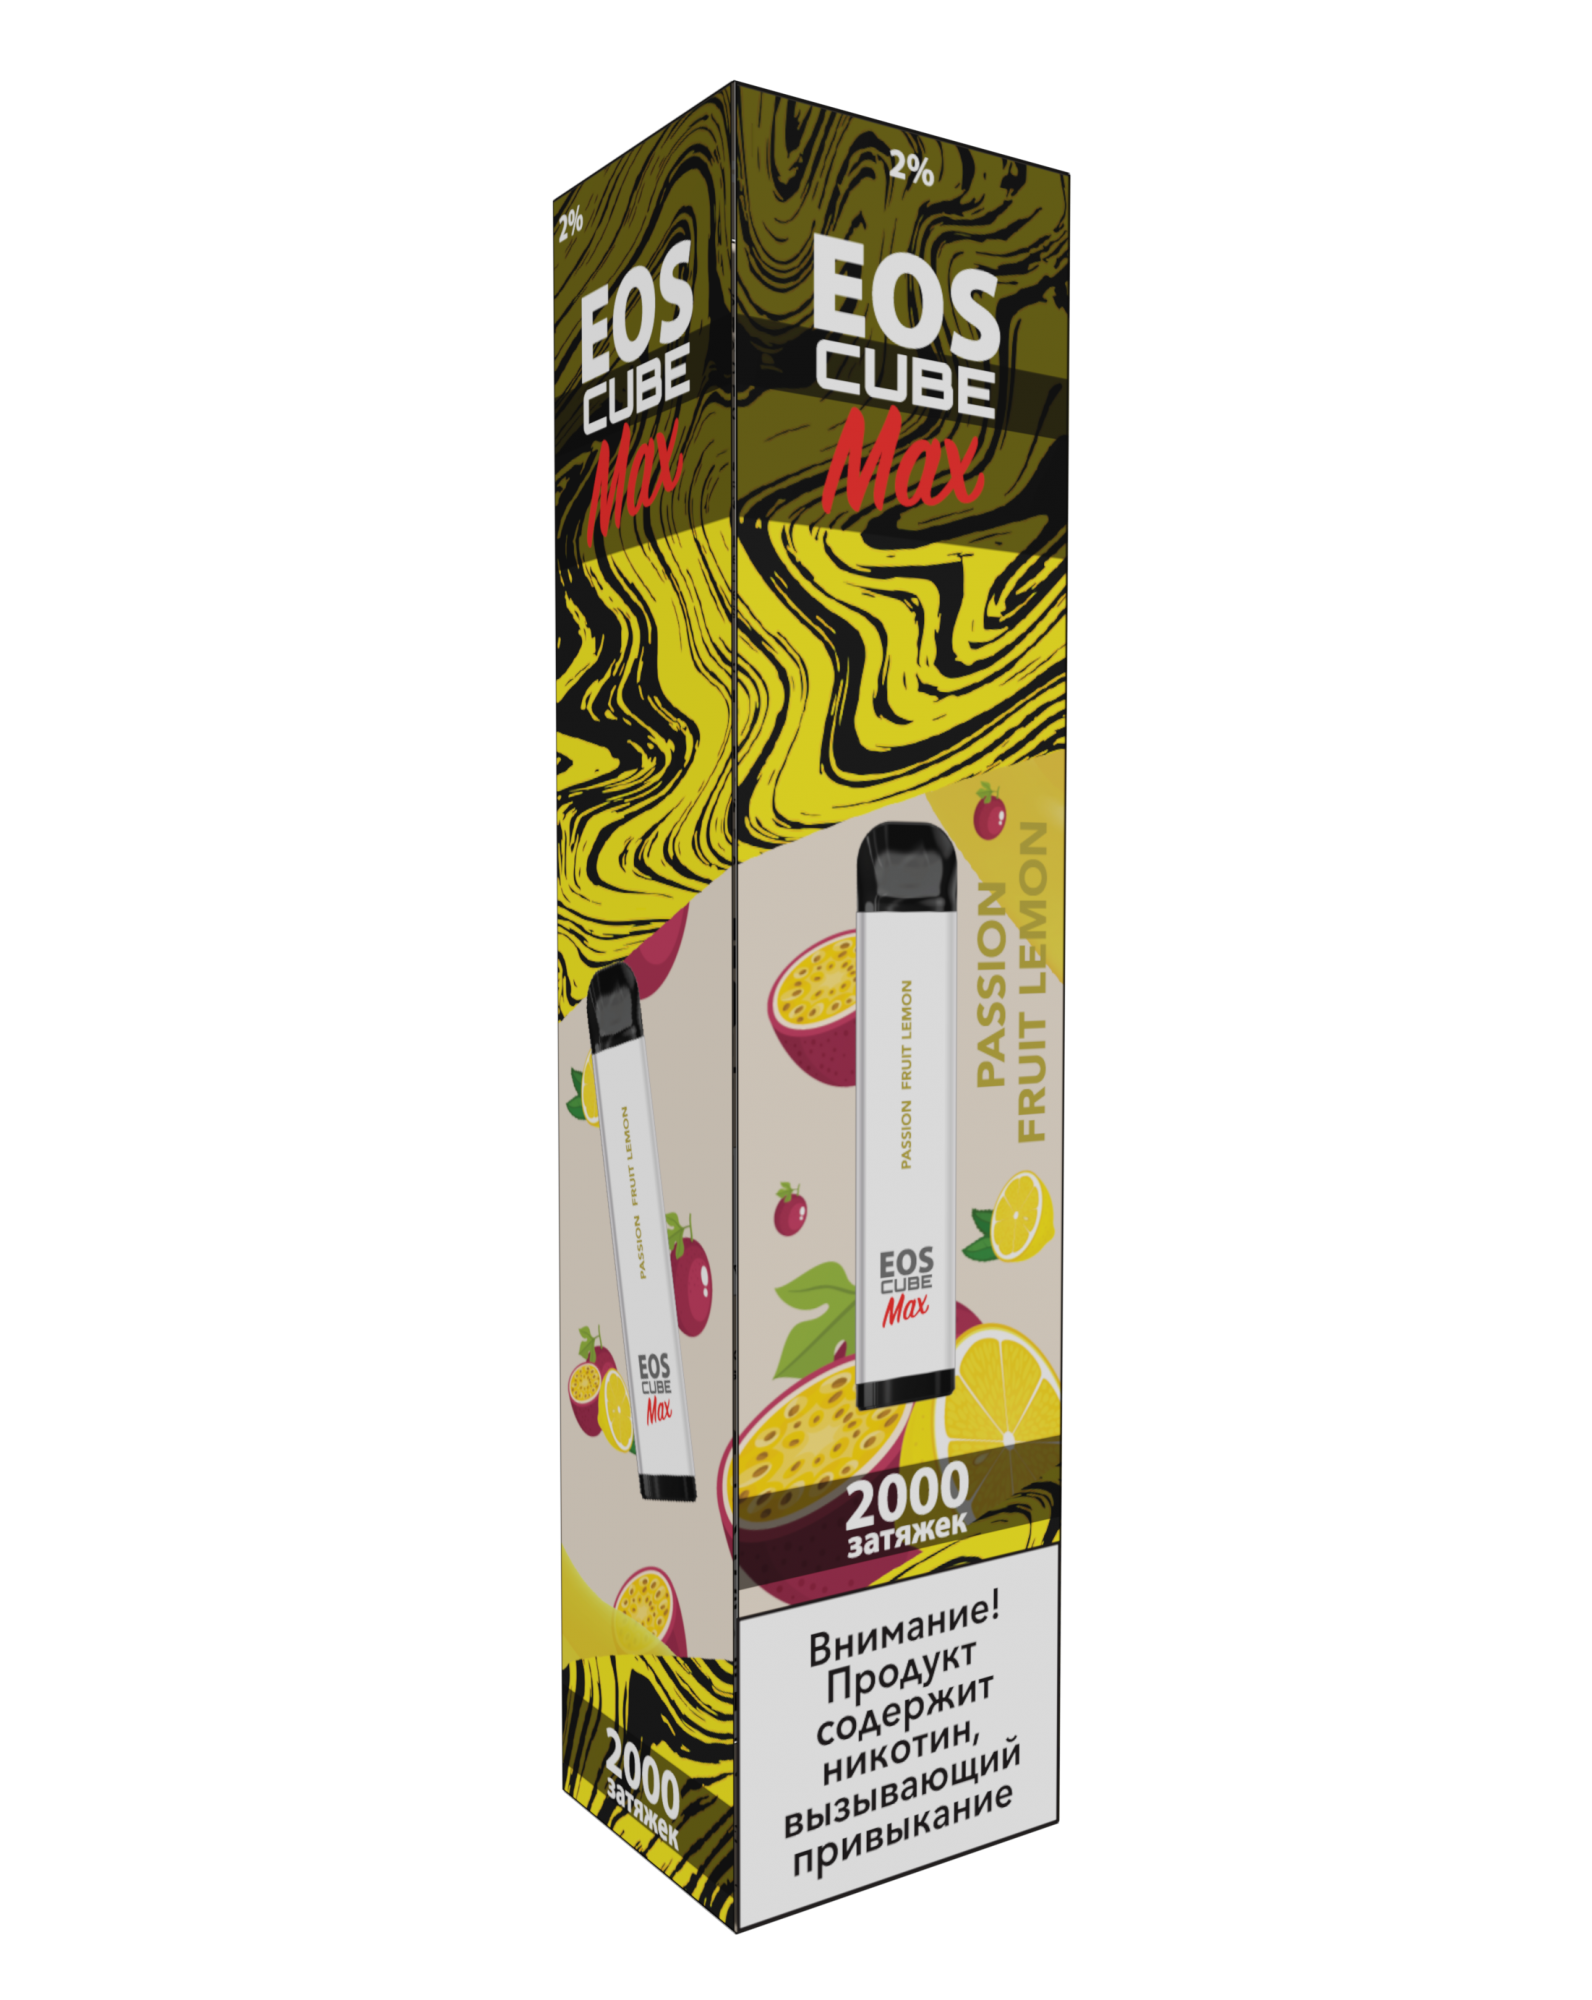 EOS Cube Max. Электронные сигареты EOS Cube Max. Электронная сигарета passion Fruit Lemon. Одноразки EOS Cube. Cube max